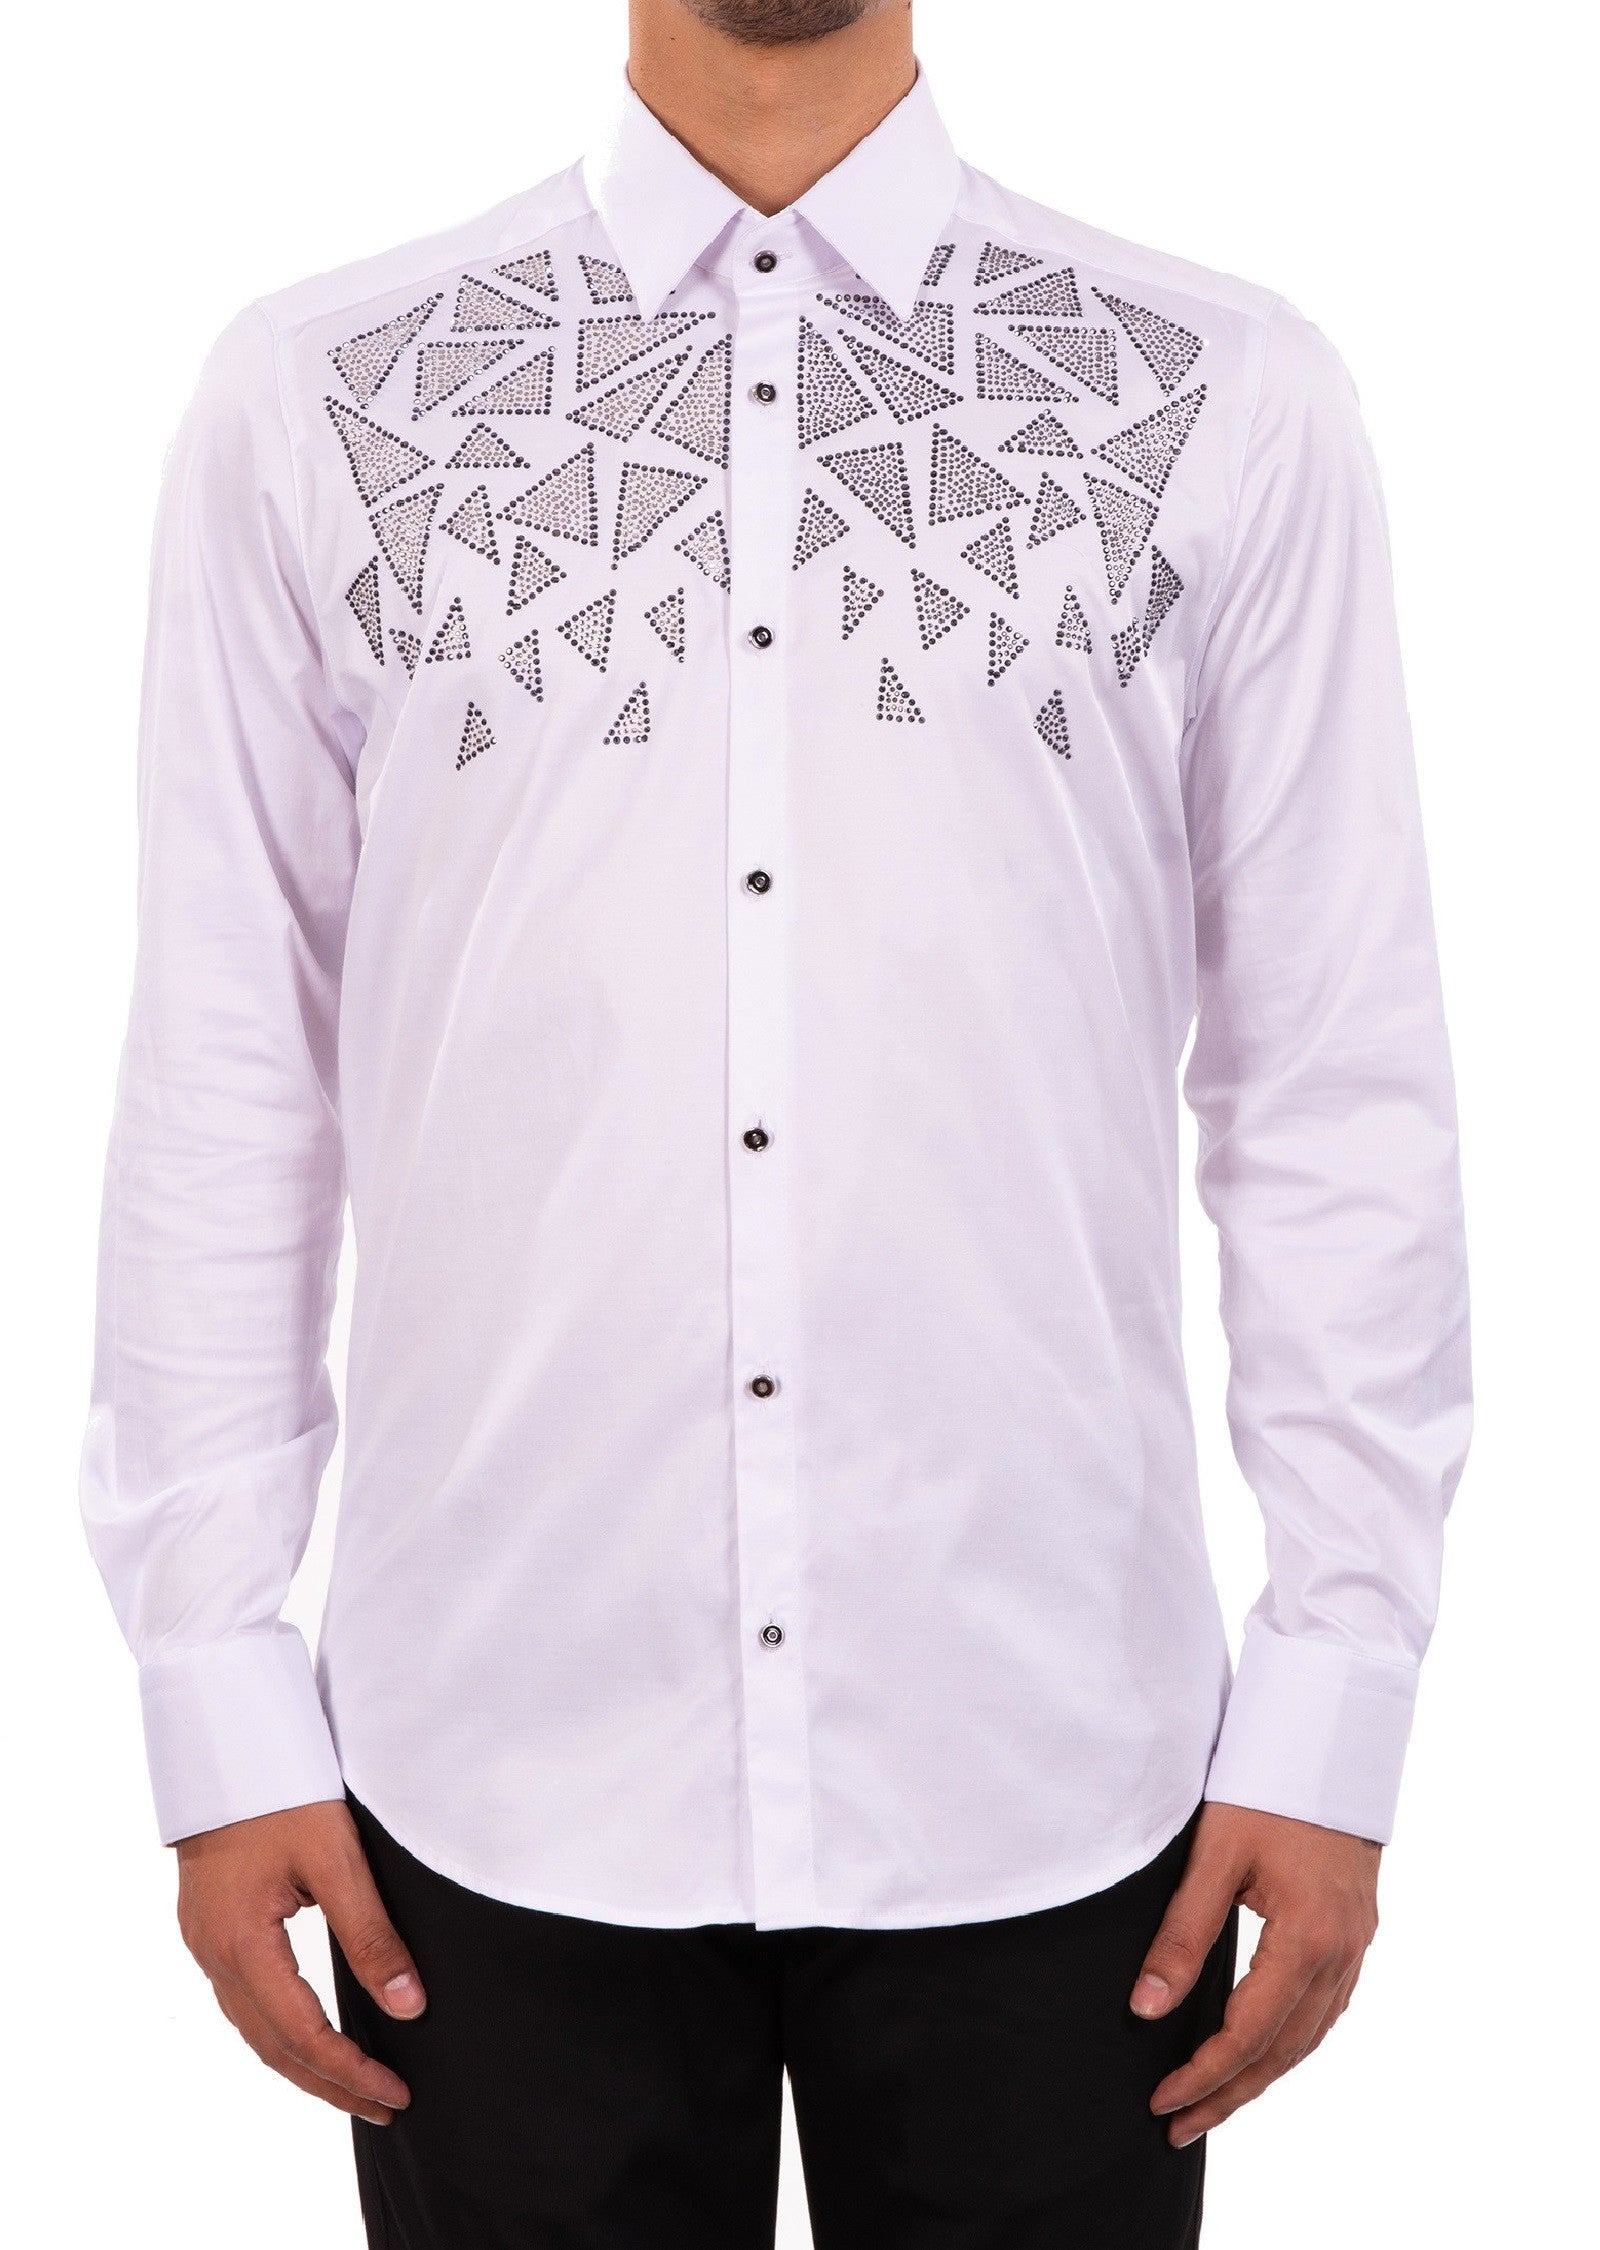 Borunke Luxury Design 100% Cotton Tee Shirt Designer Rhinestone